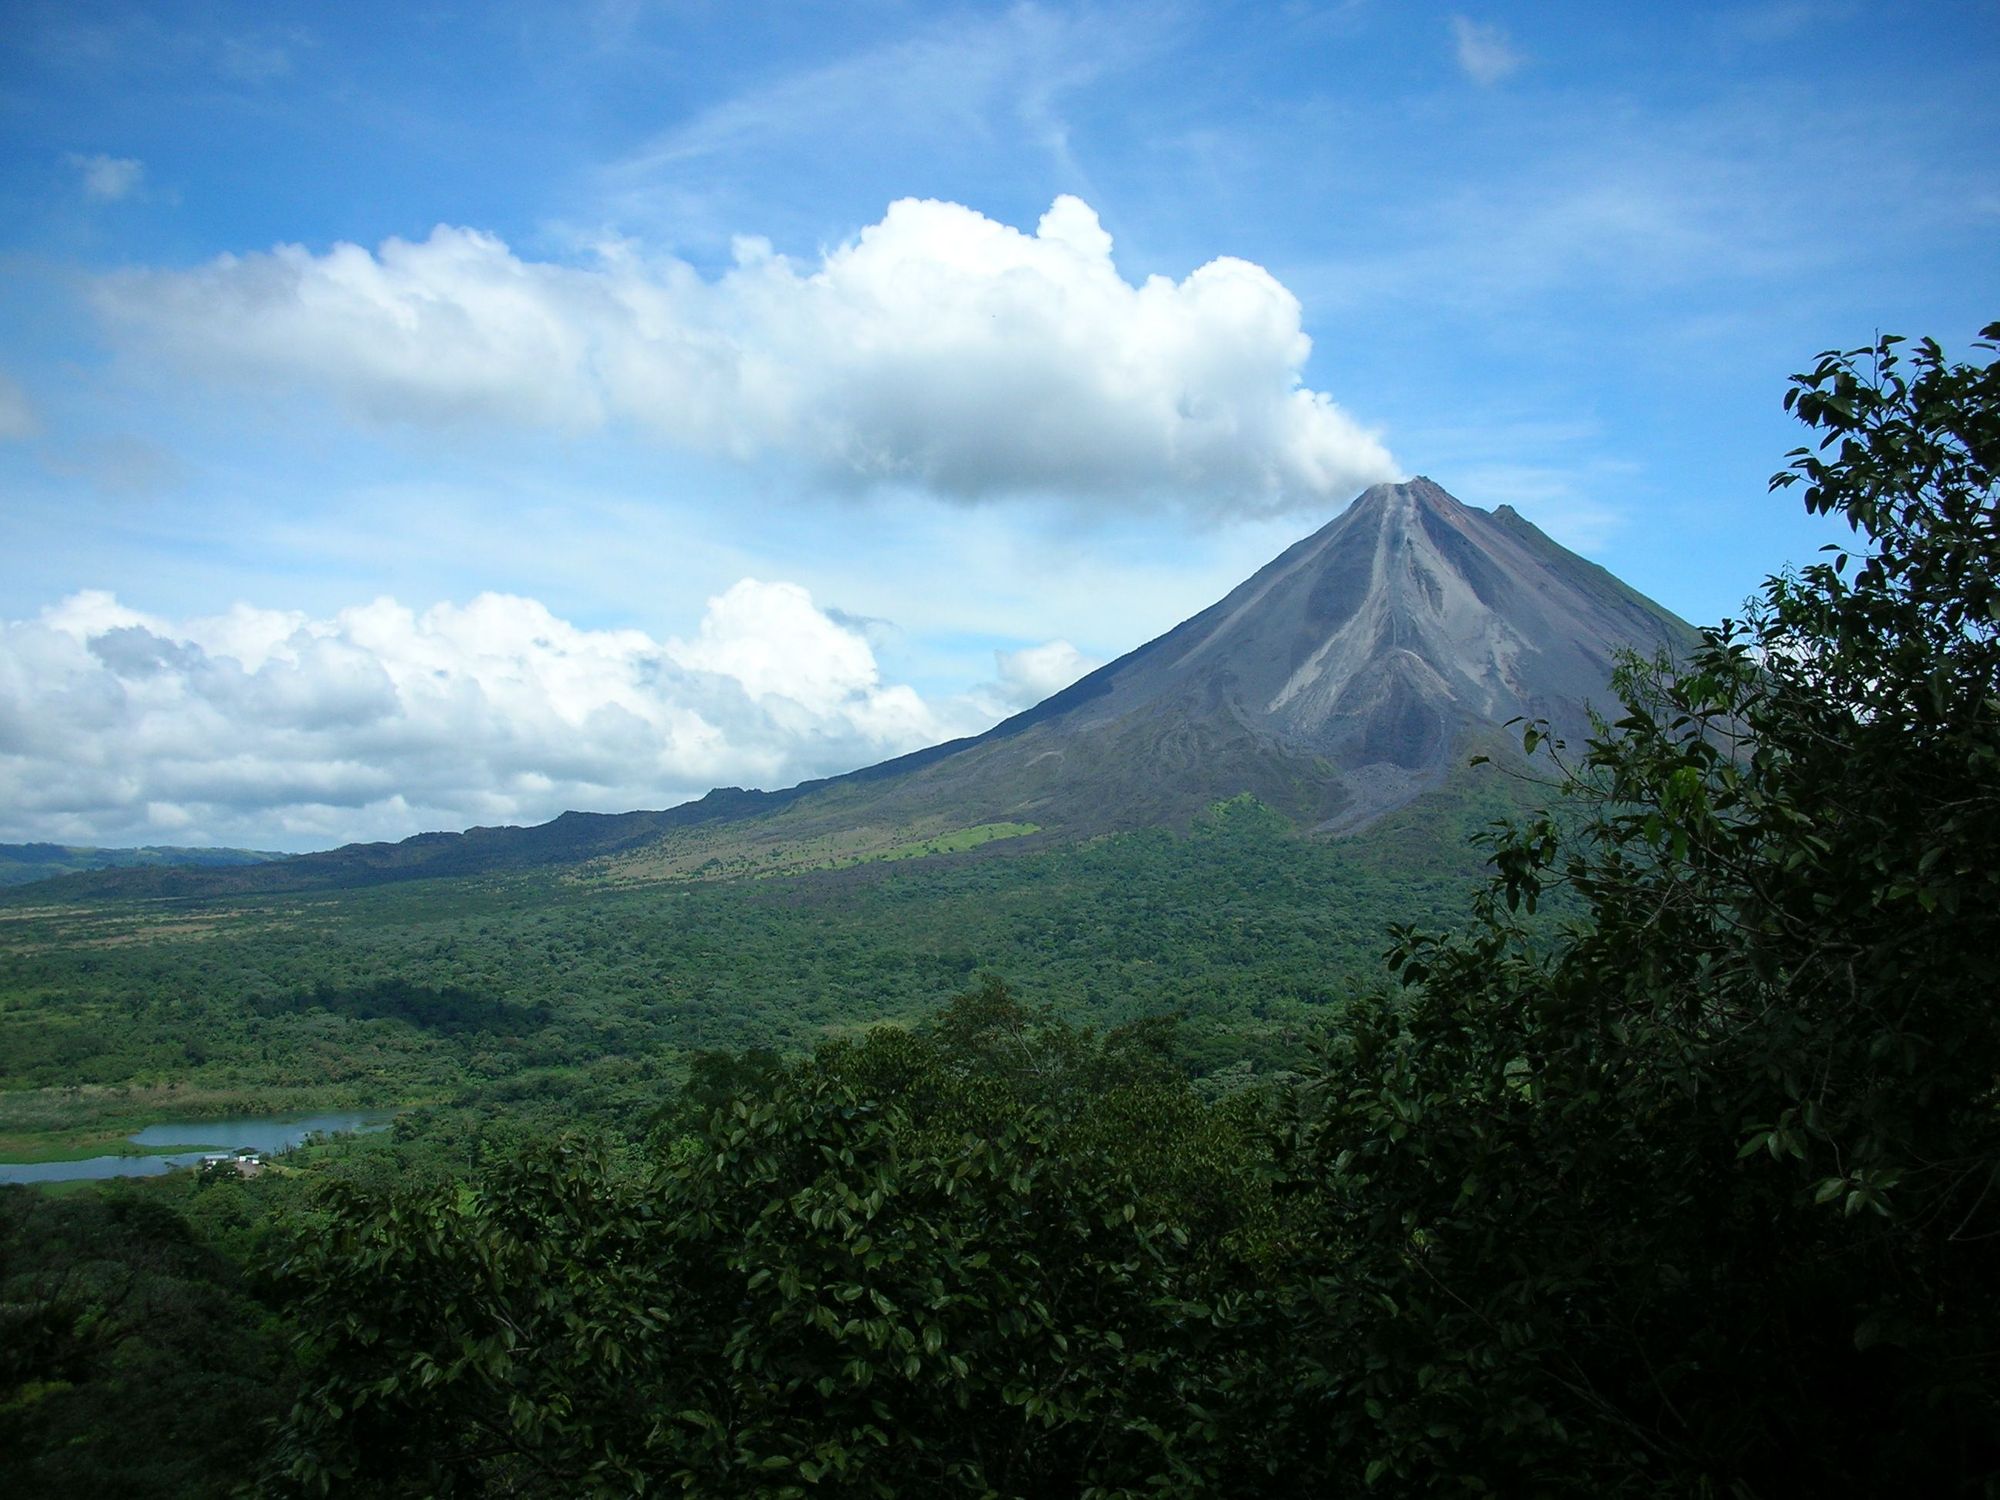 Mount Arenal, Costa Rica, belching smoke during the 2008 eruption.